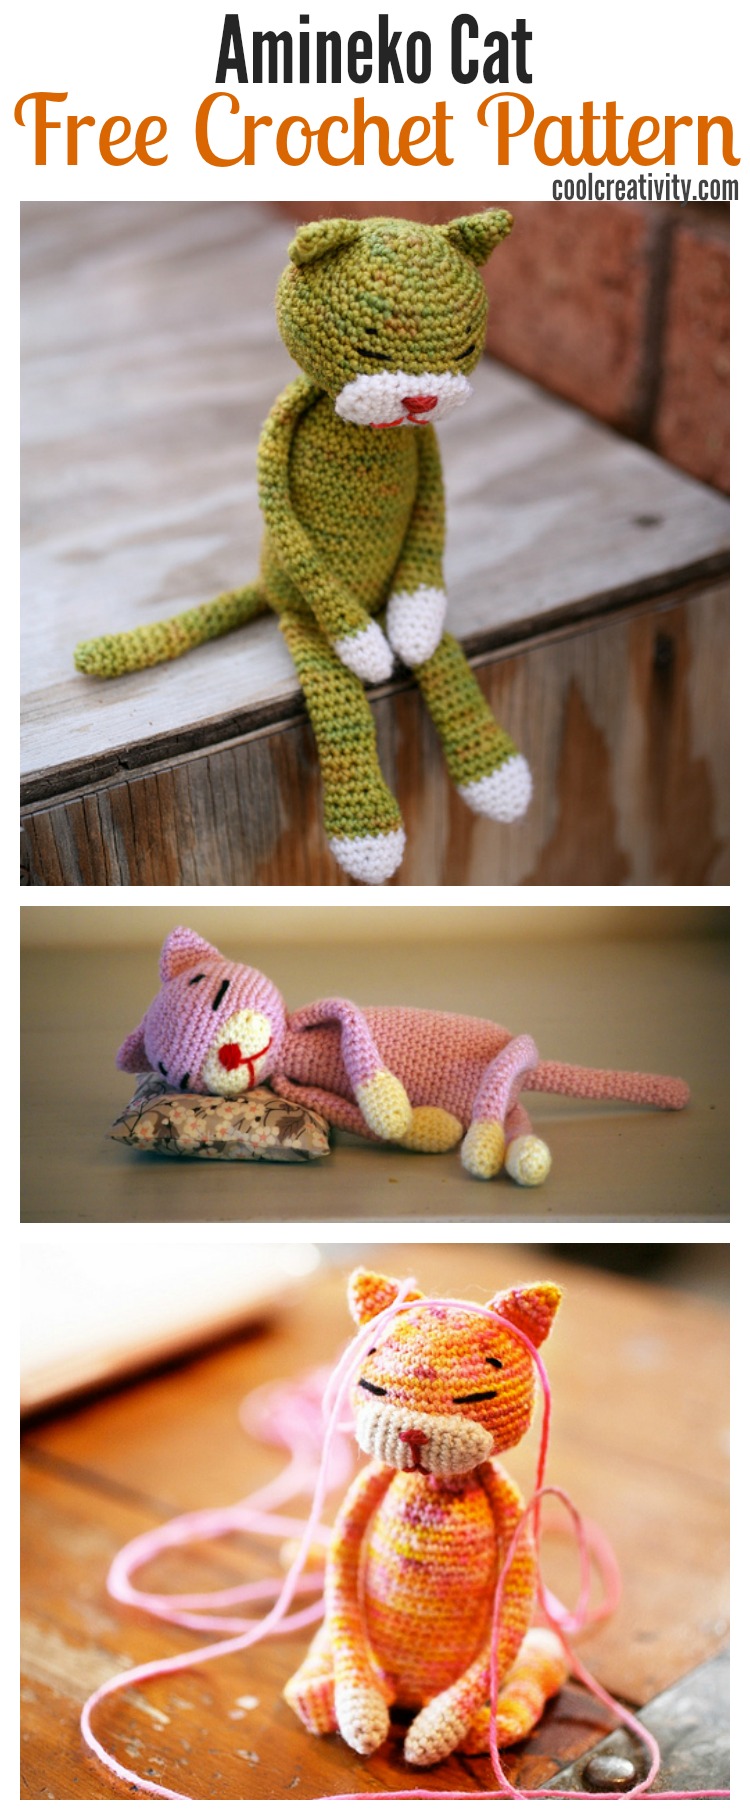 Crochet Amineko Cat with Free Pattern 